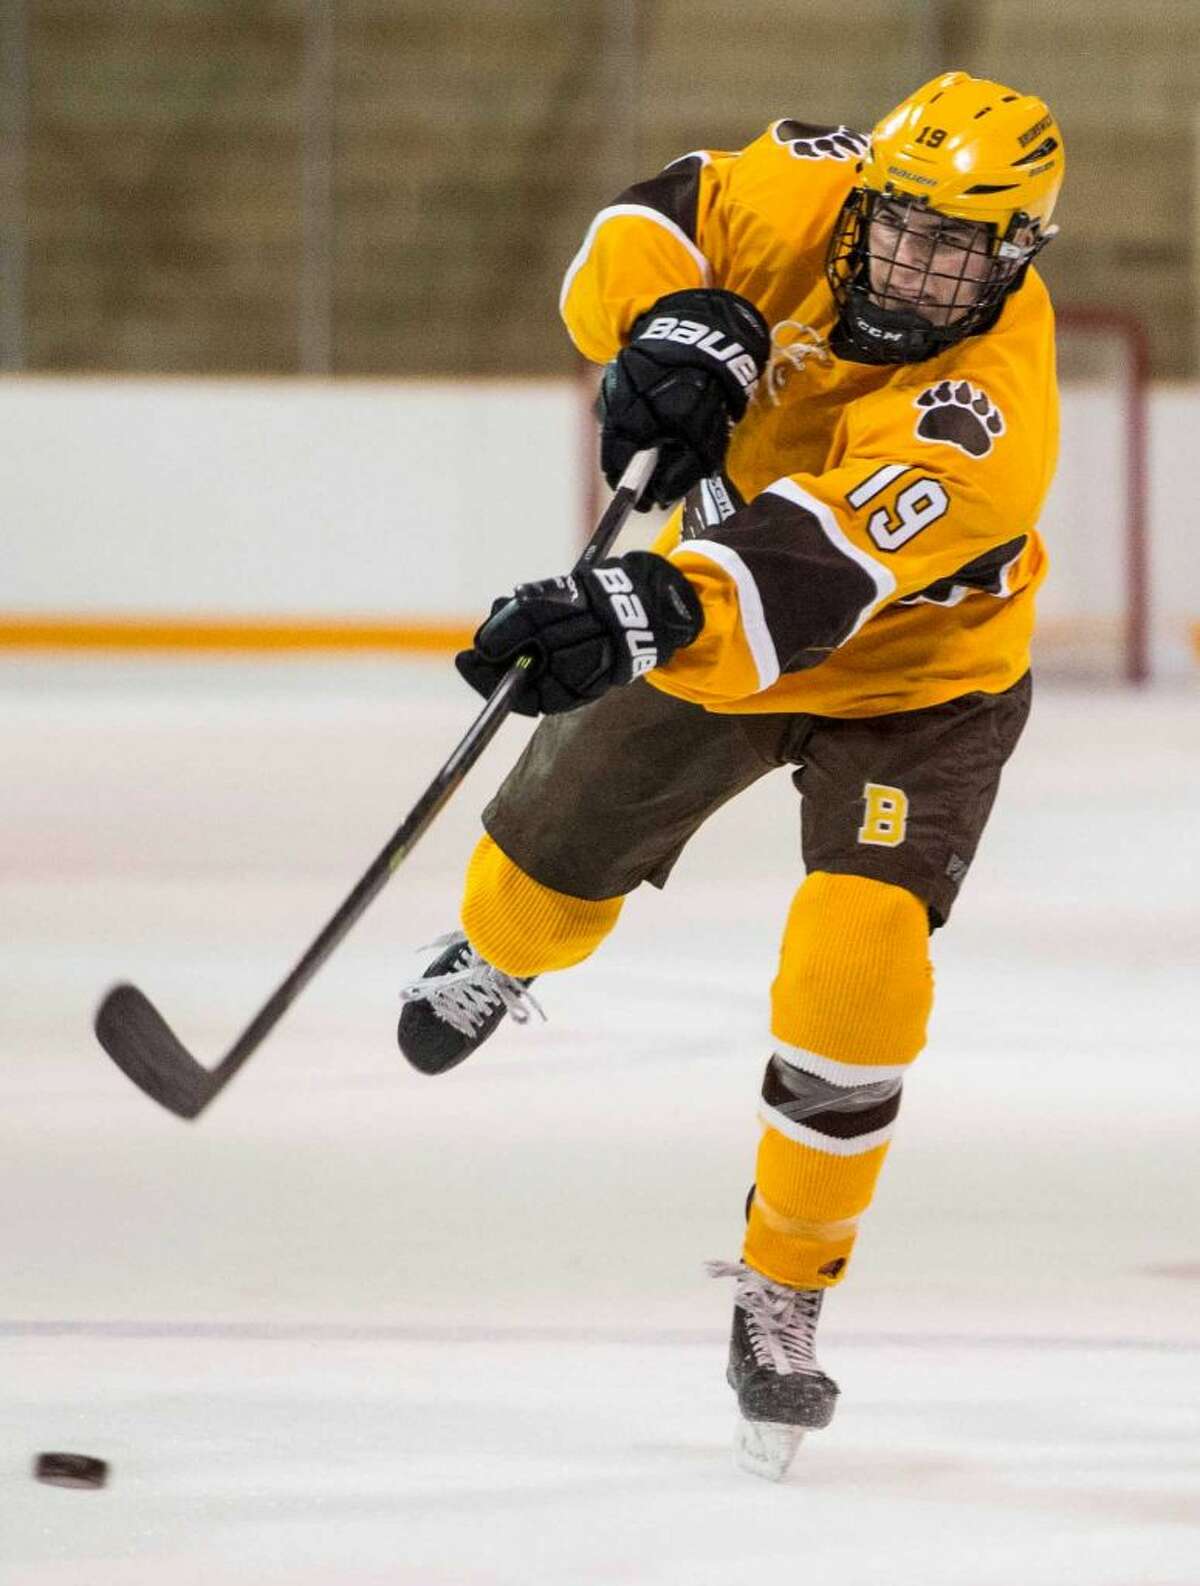 Brunswick School senior defenseman Max Fuld was recently named to the All-New England Hockey Team.